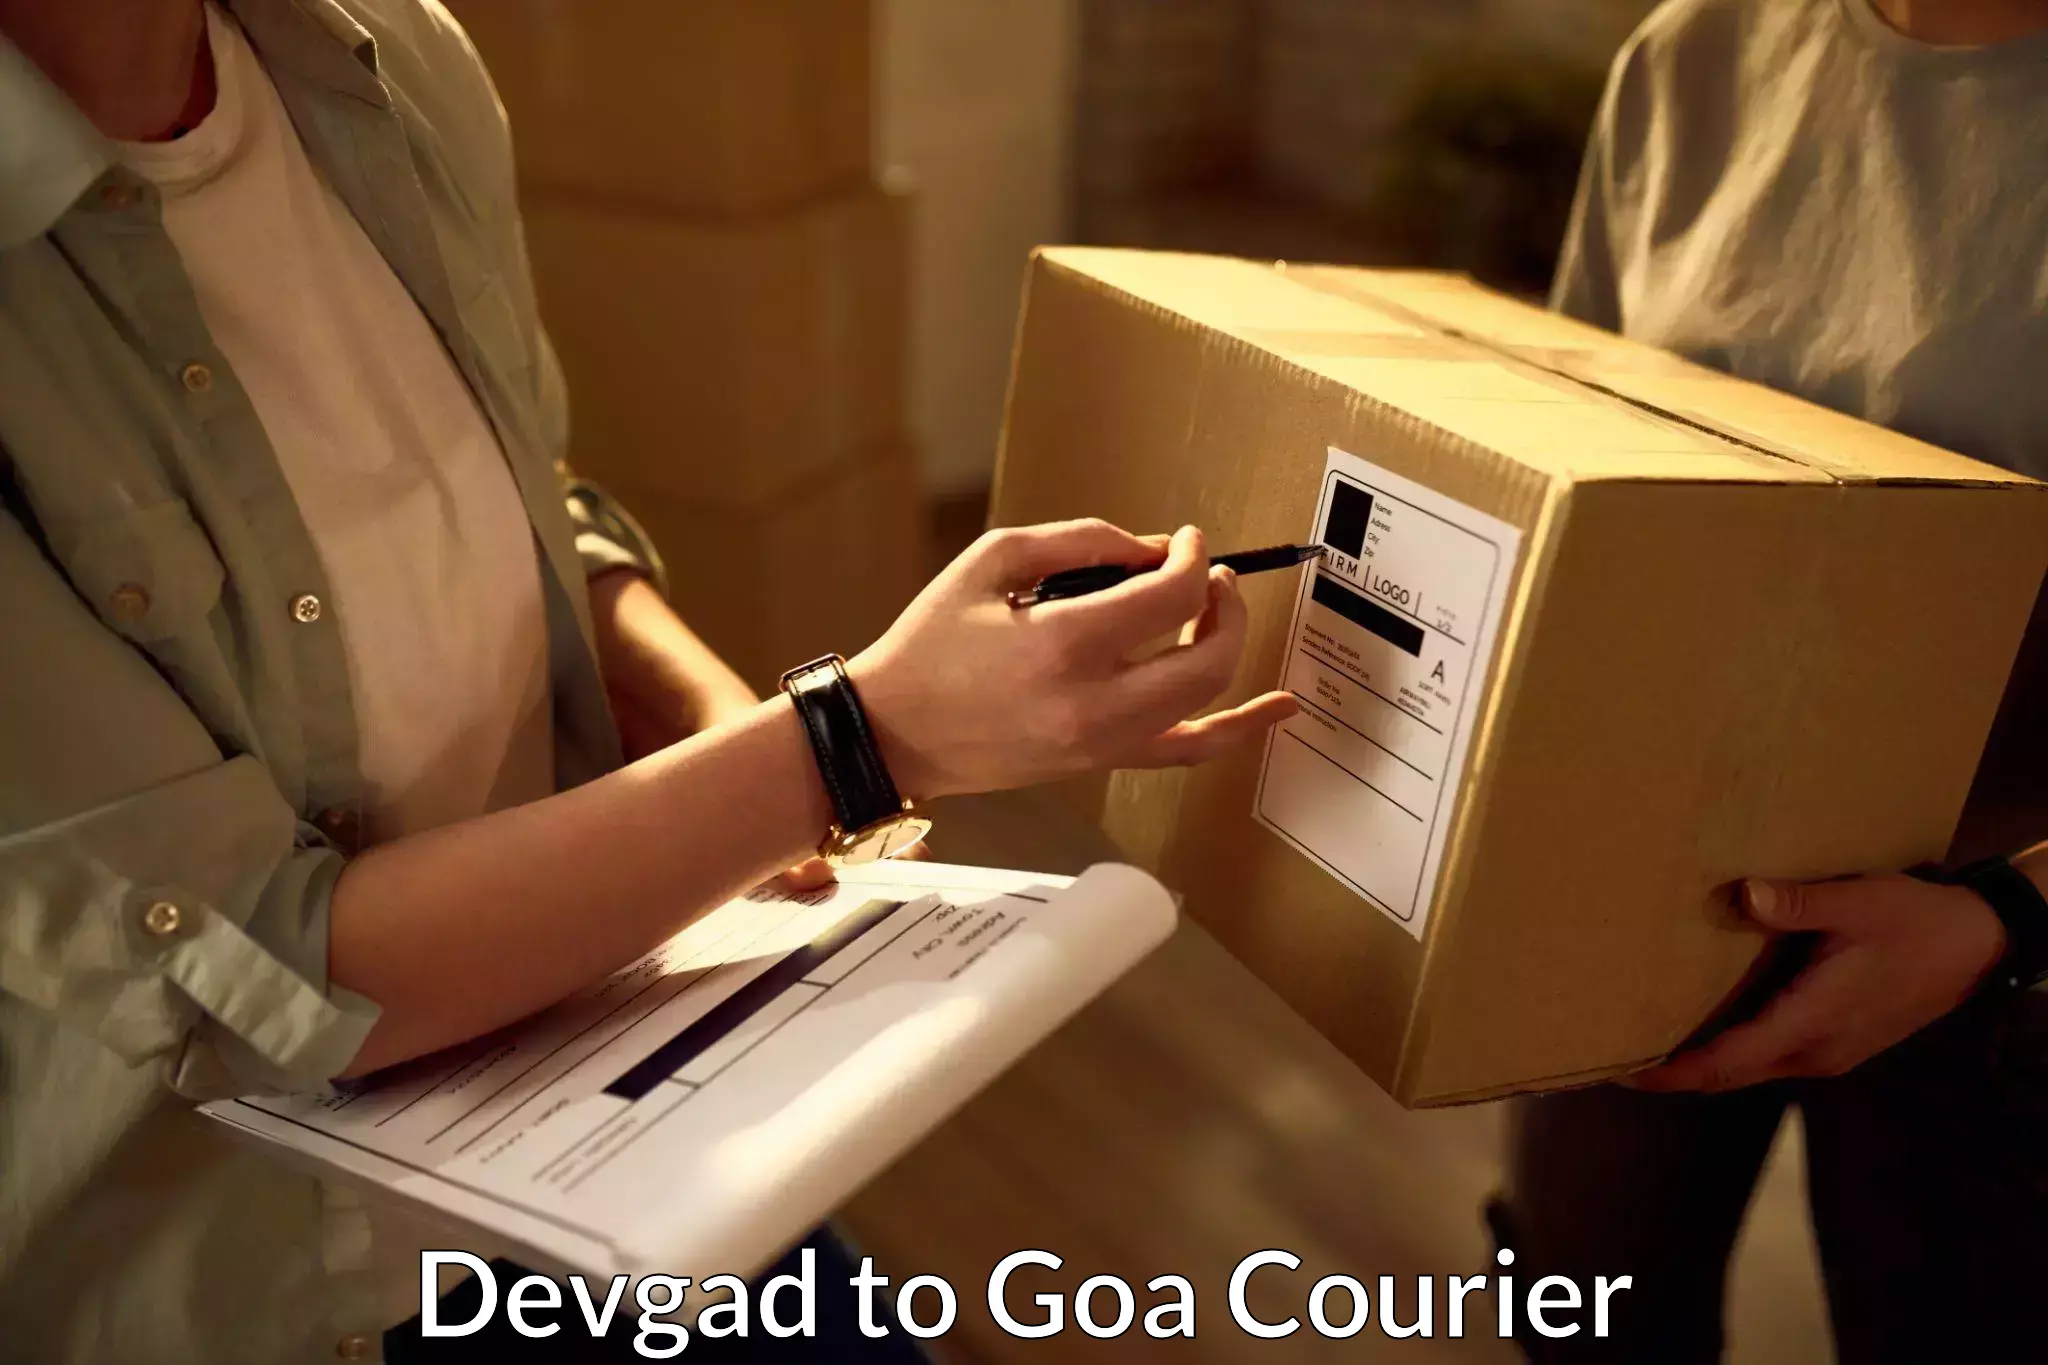 Courier service comparison Devgad to Mormugao Port